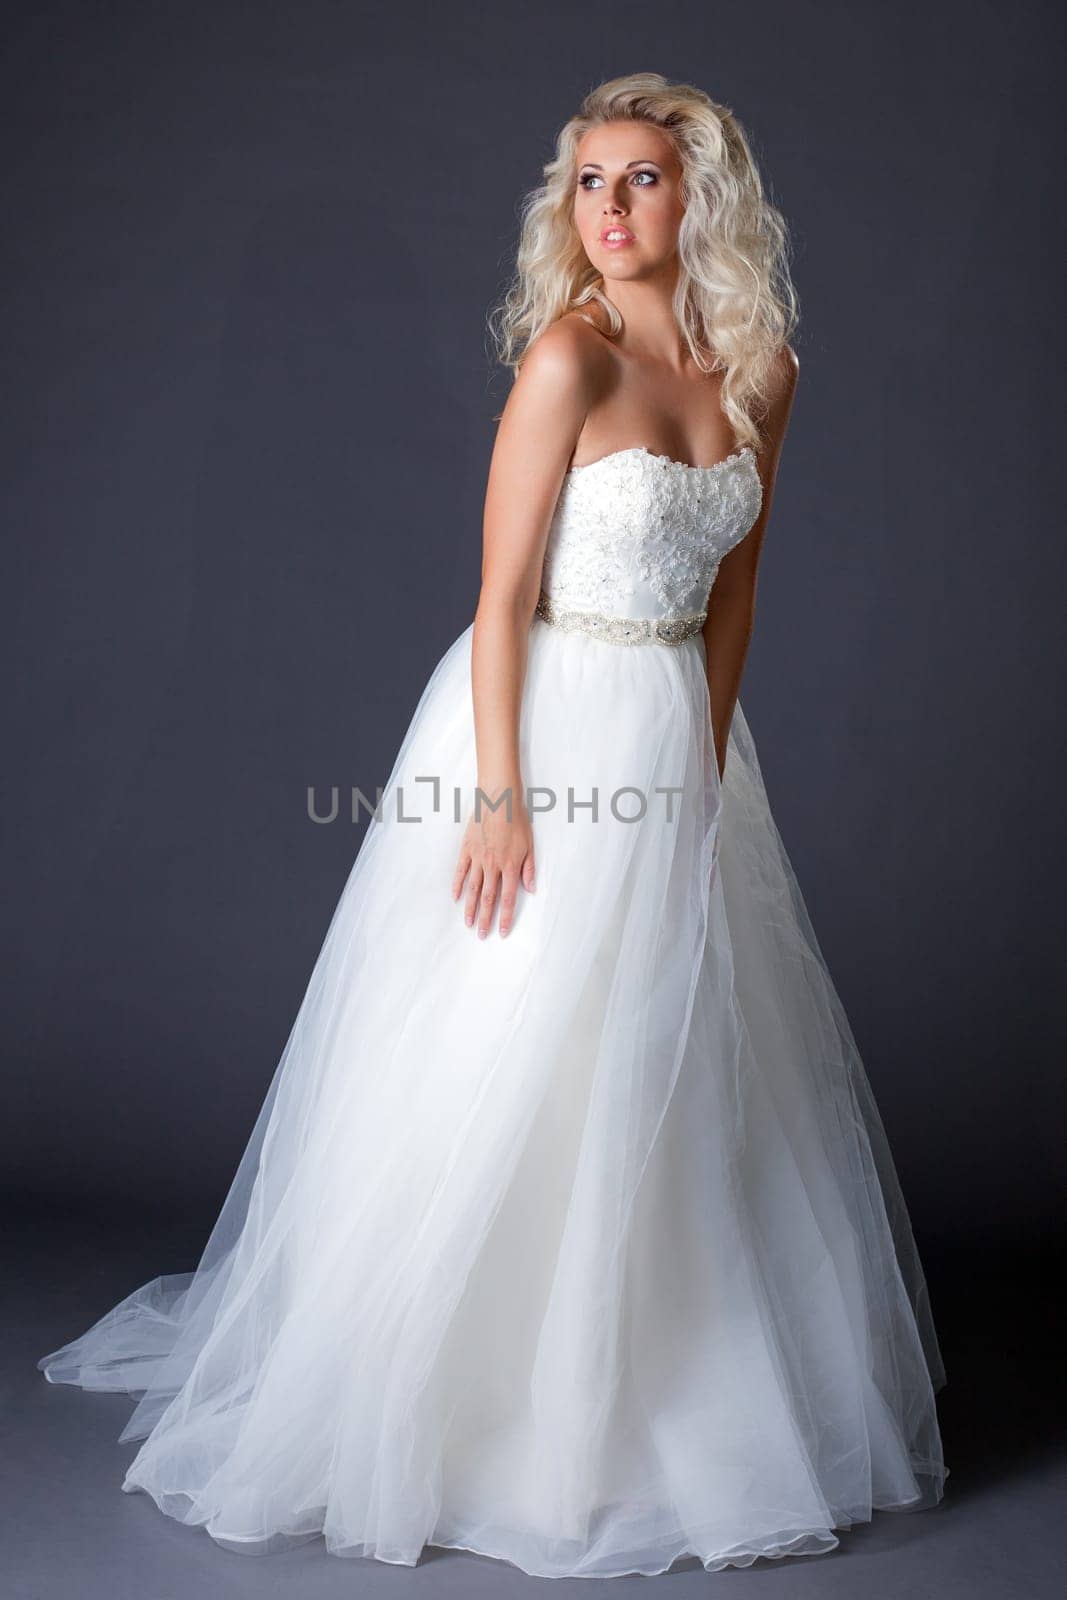 Romantic model posing in fashionable wedding dress, on gray background